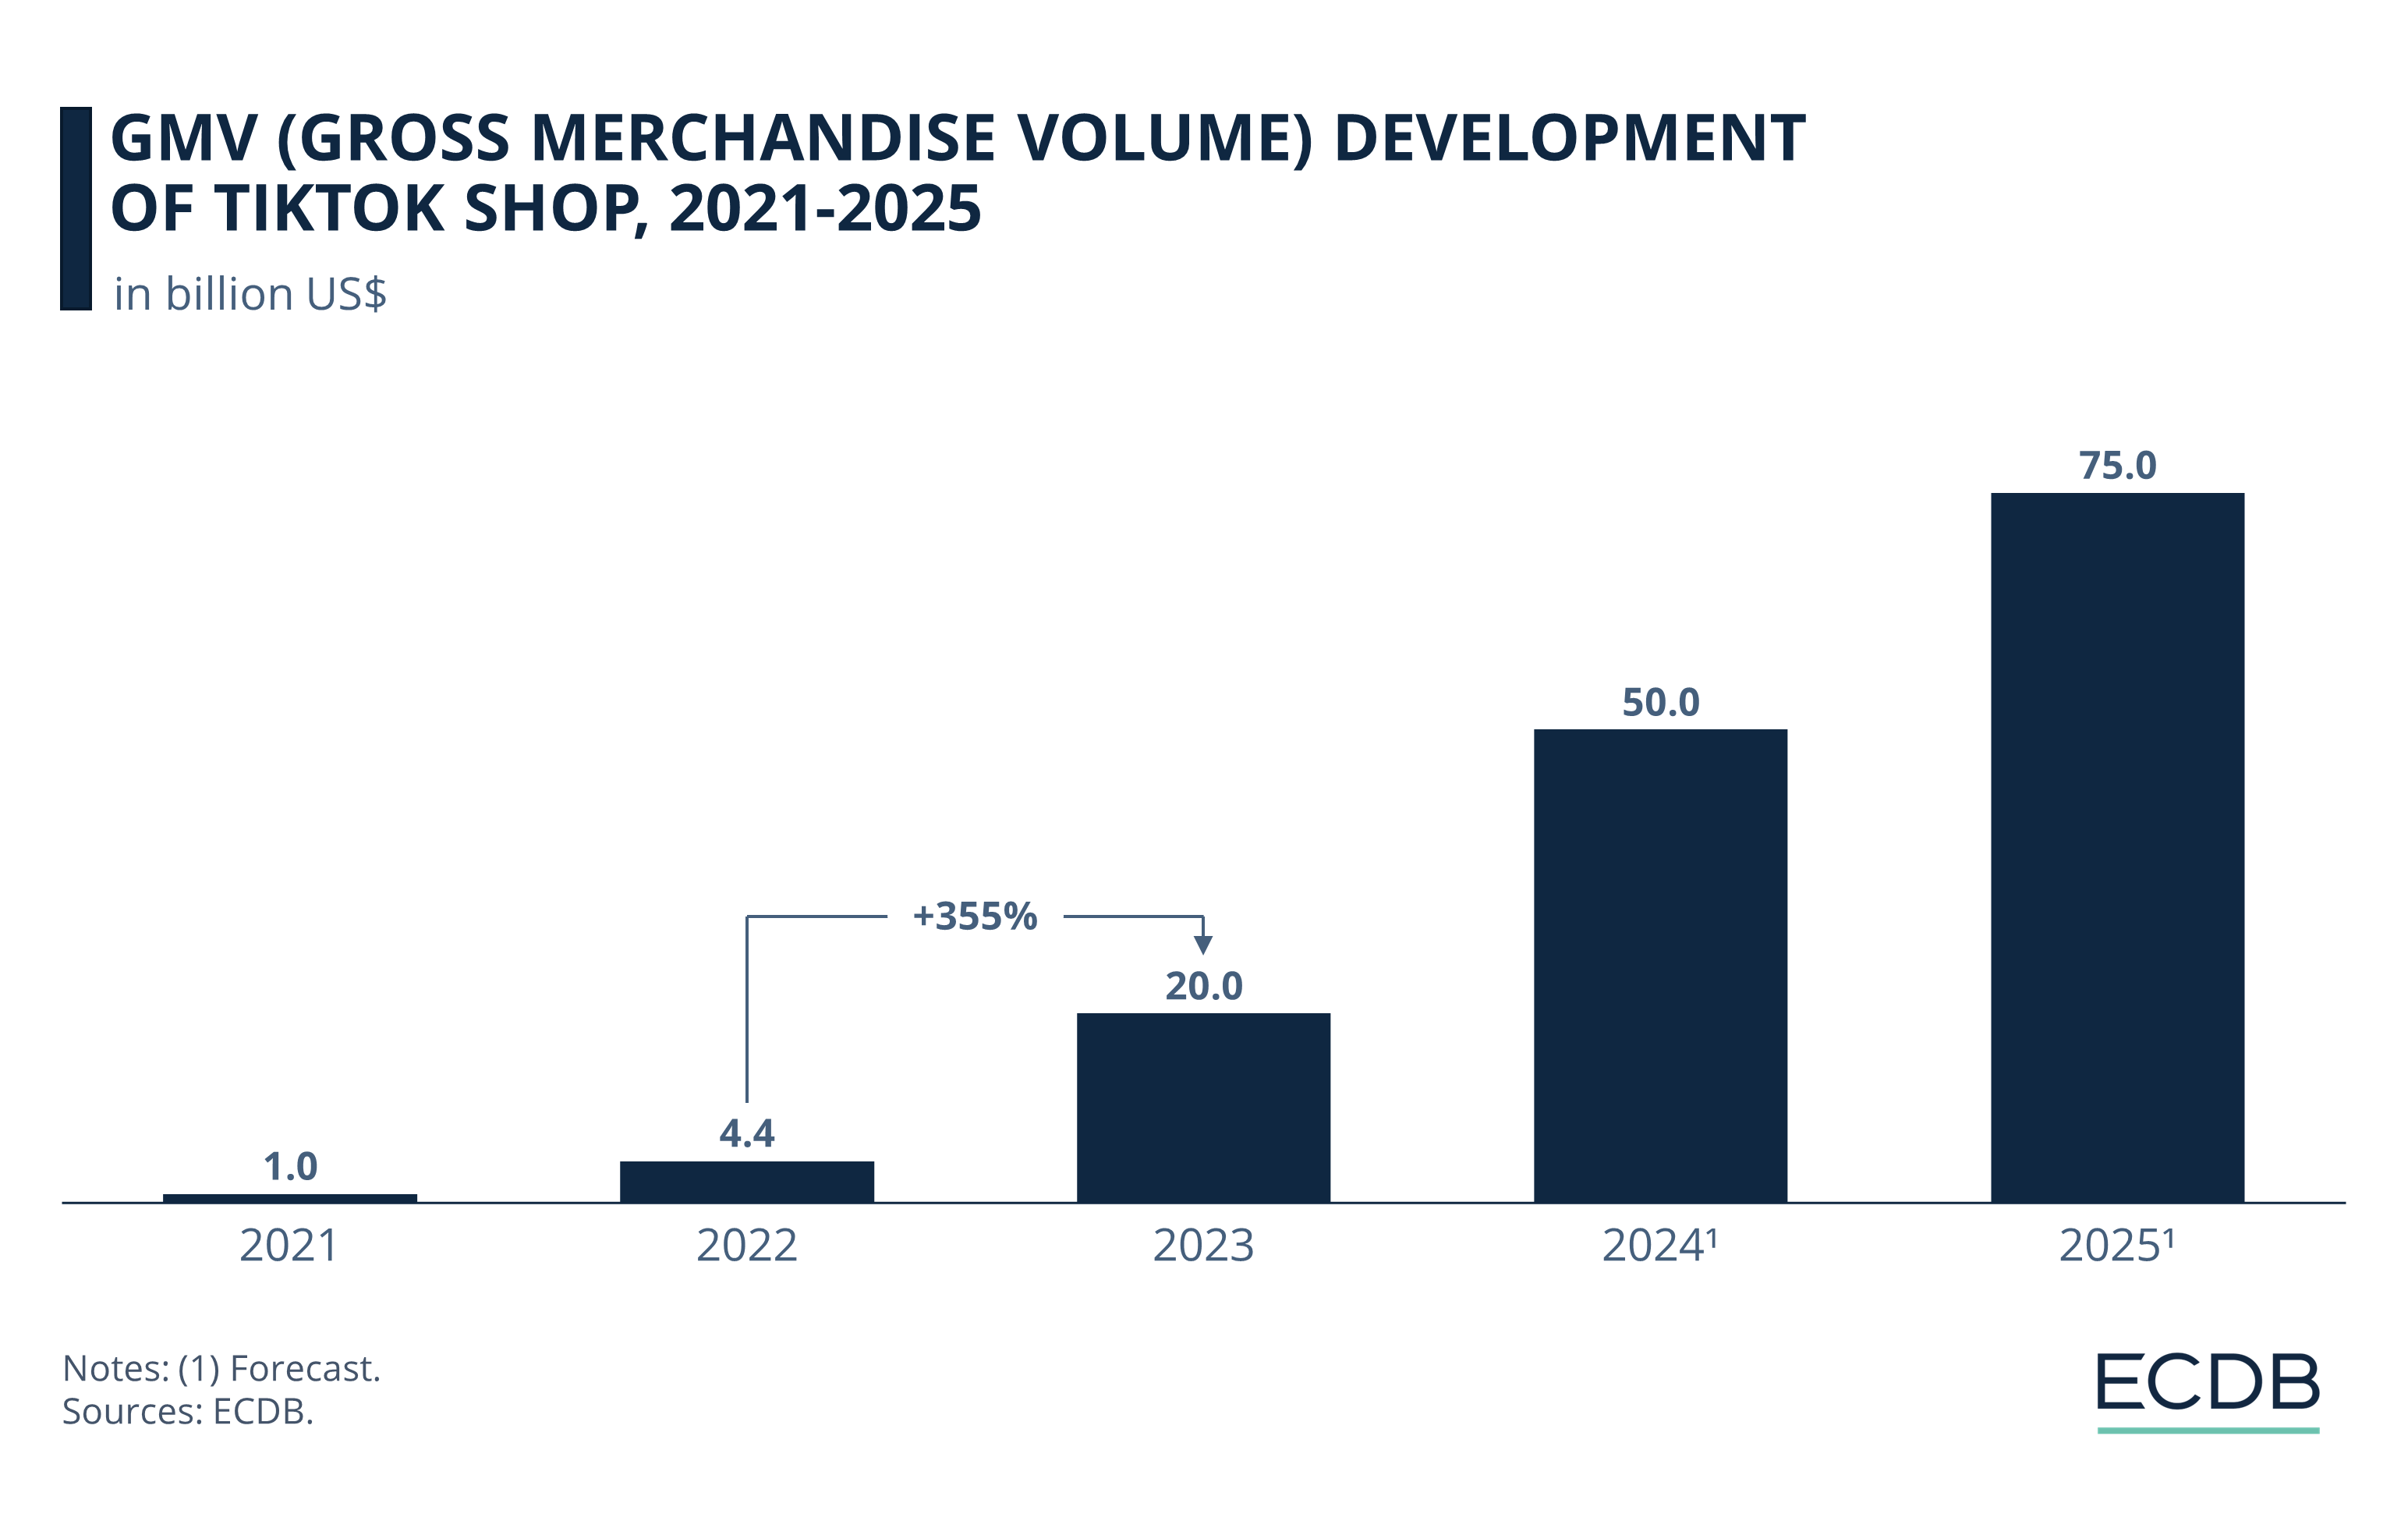 GMV (Gross Merchandise Volume) Development of TikTok Shop, 2021-2025